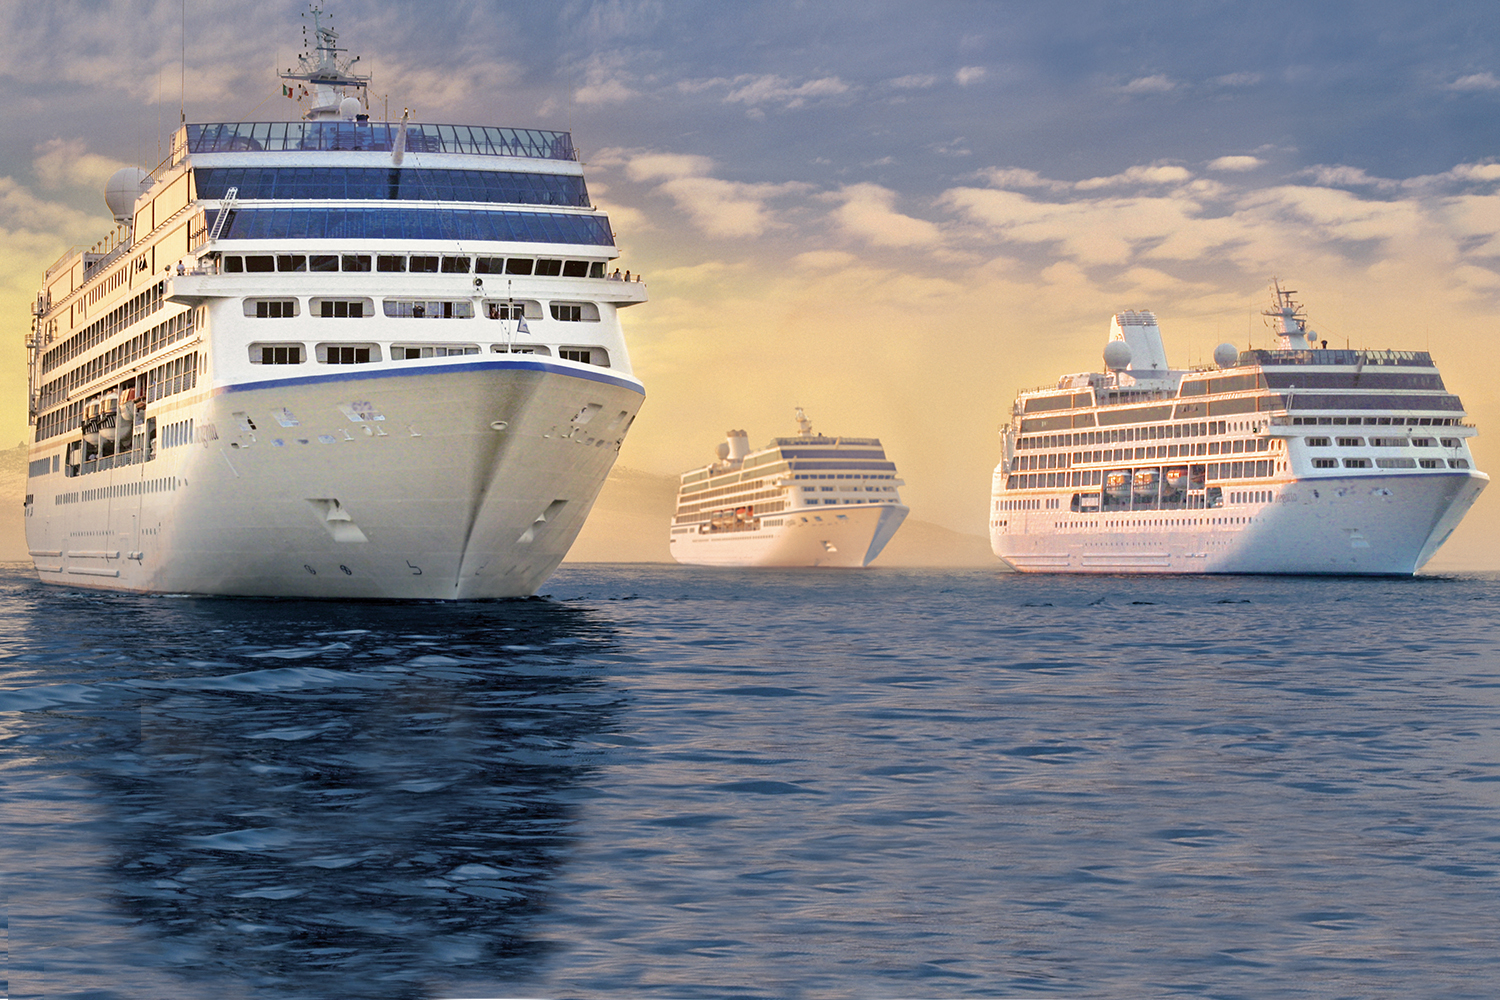 oceania cruises shore excursion cancellation policy